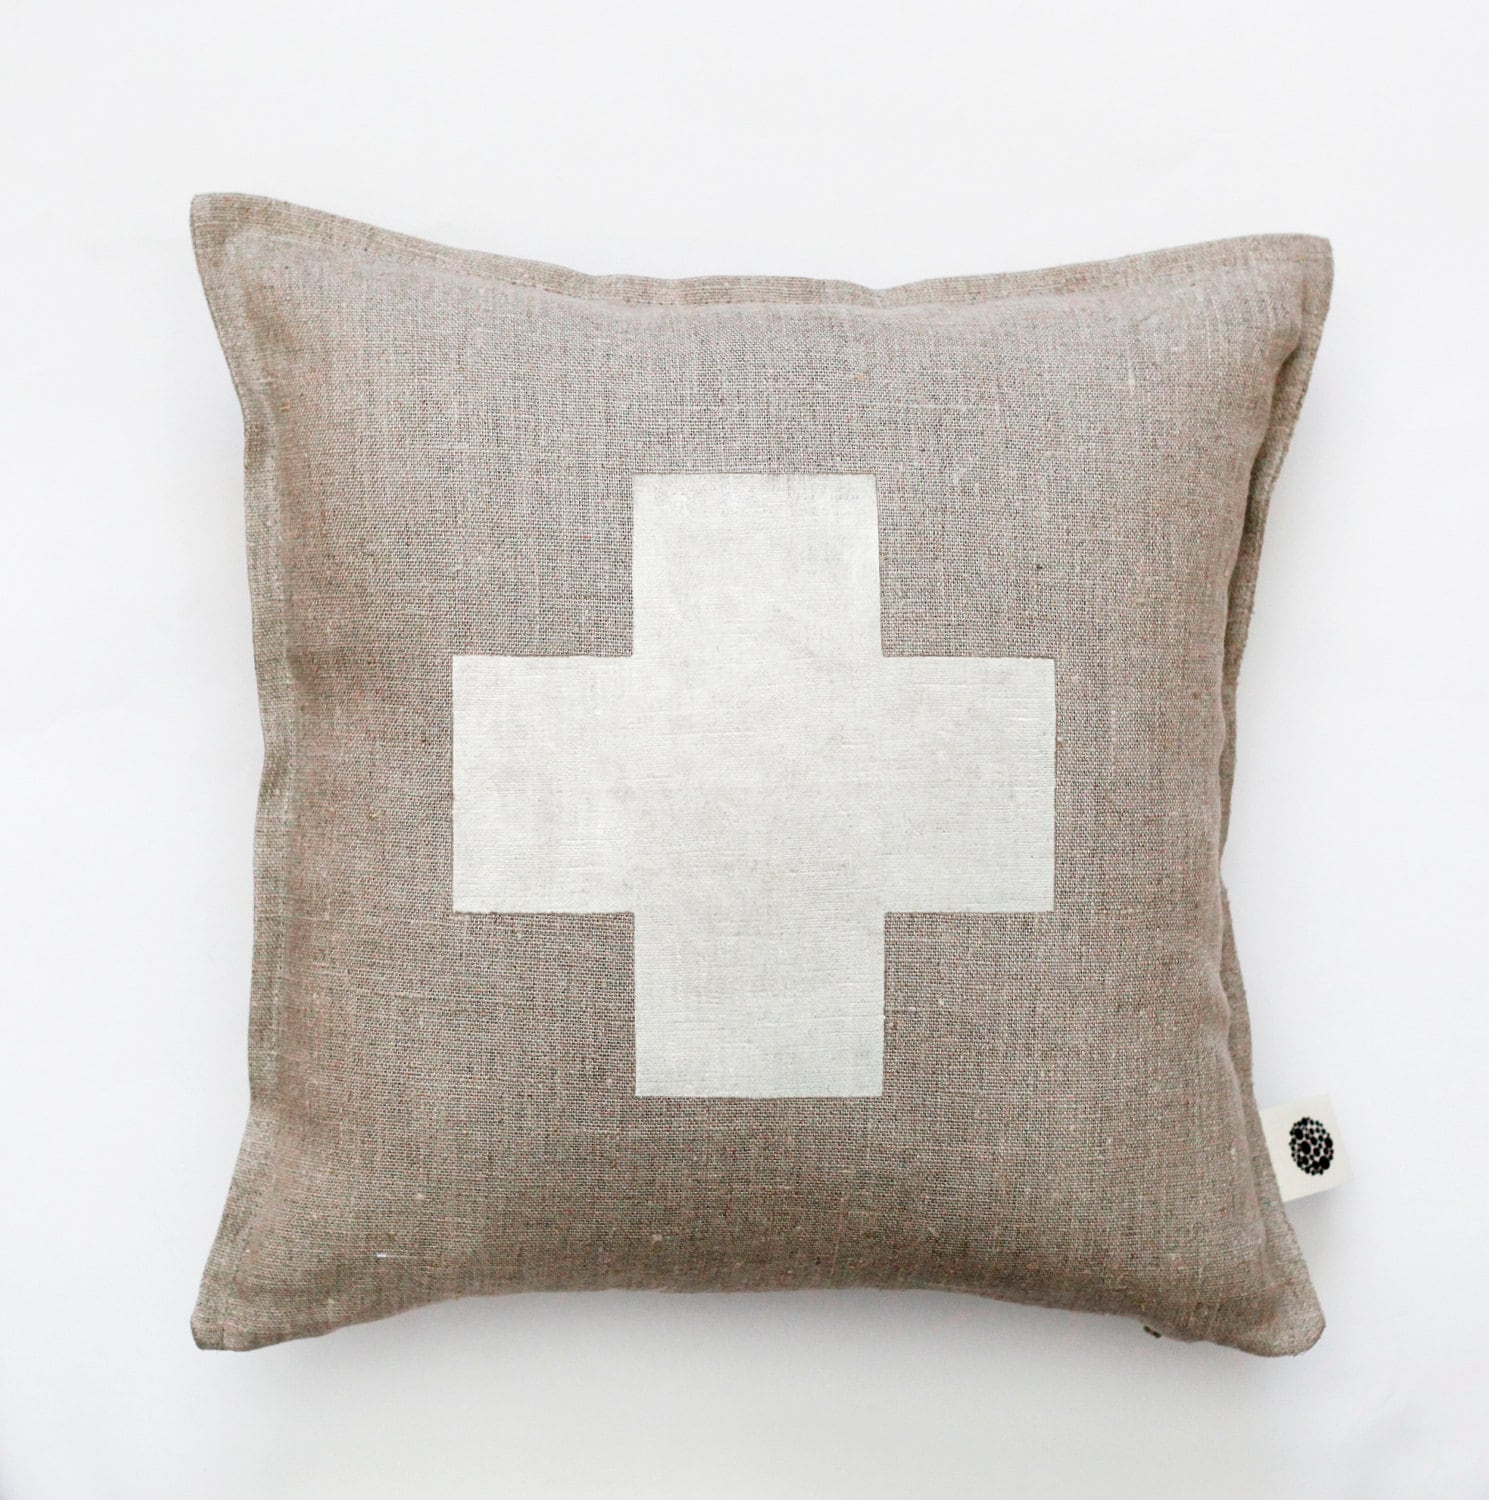 Swiss cross pillow for sale  